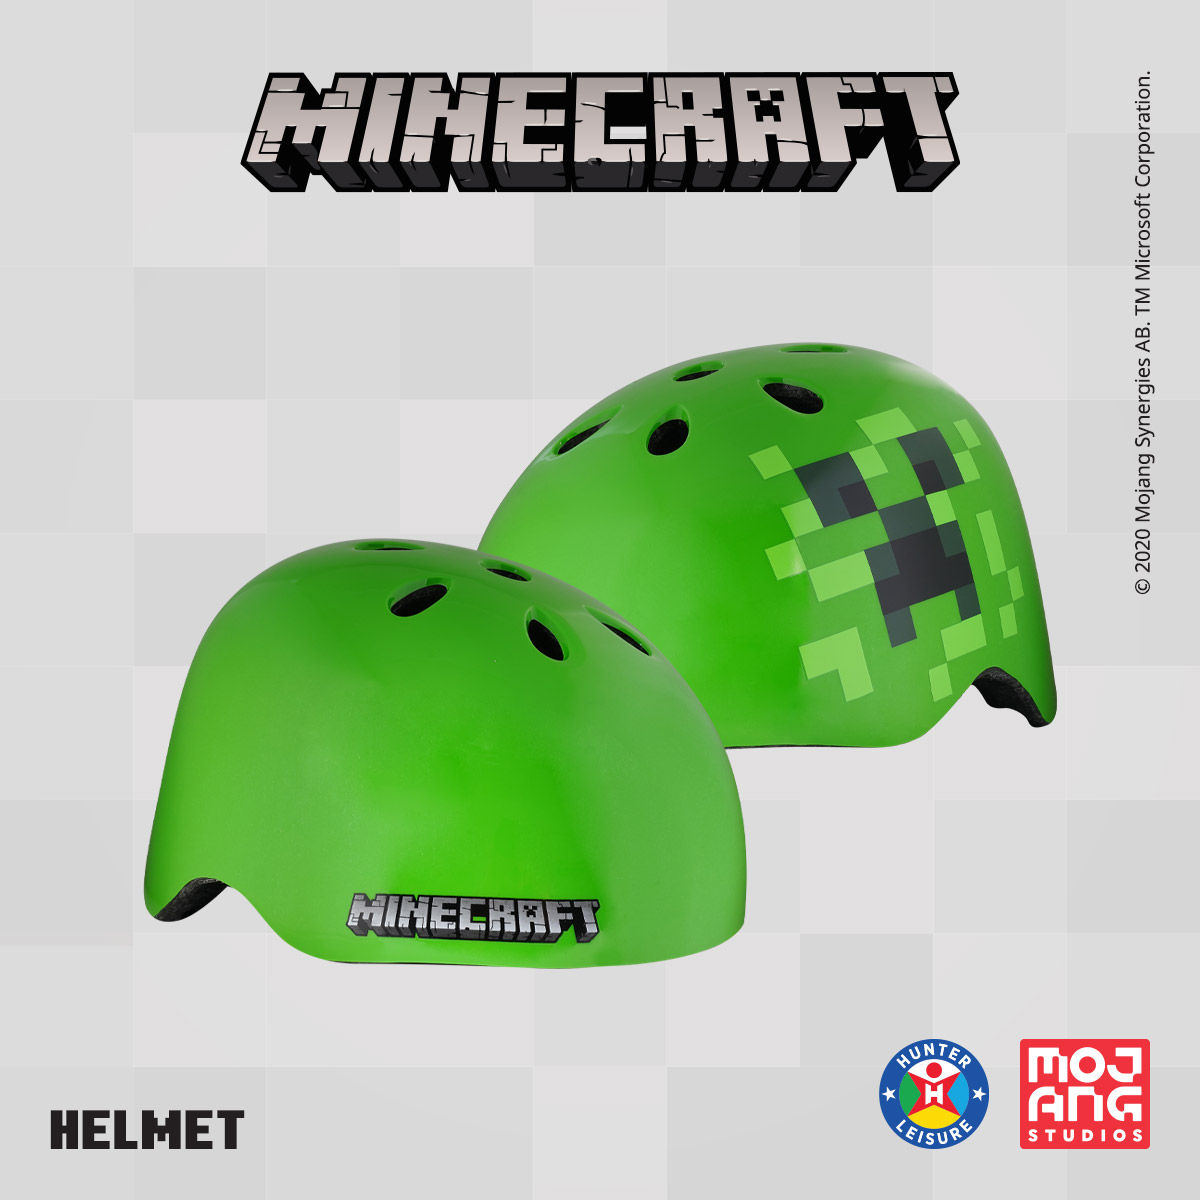 www.hunterleisure.com.au Minecraft Helmet Big W Hunter Leisure